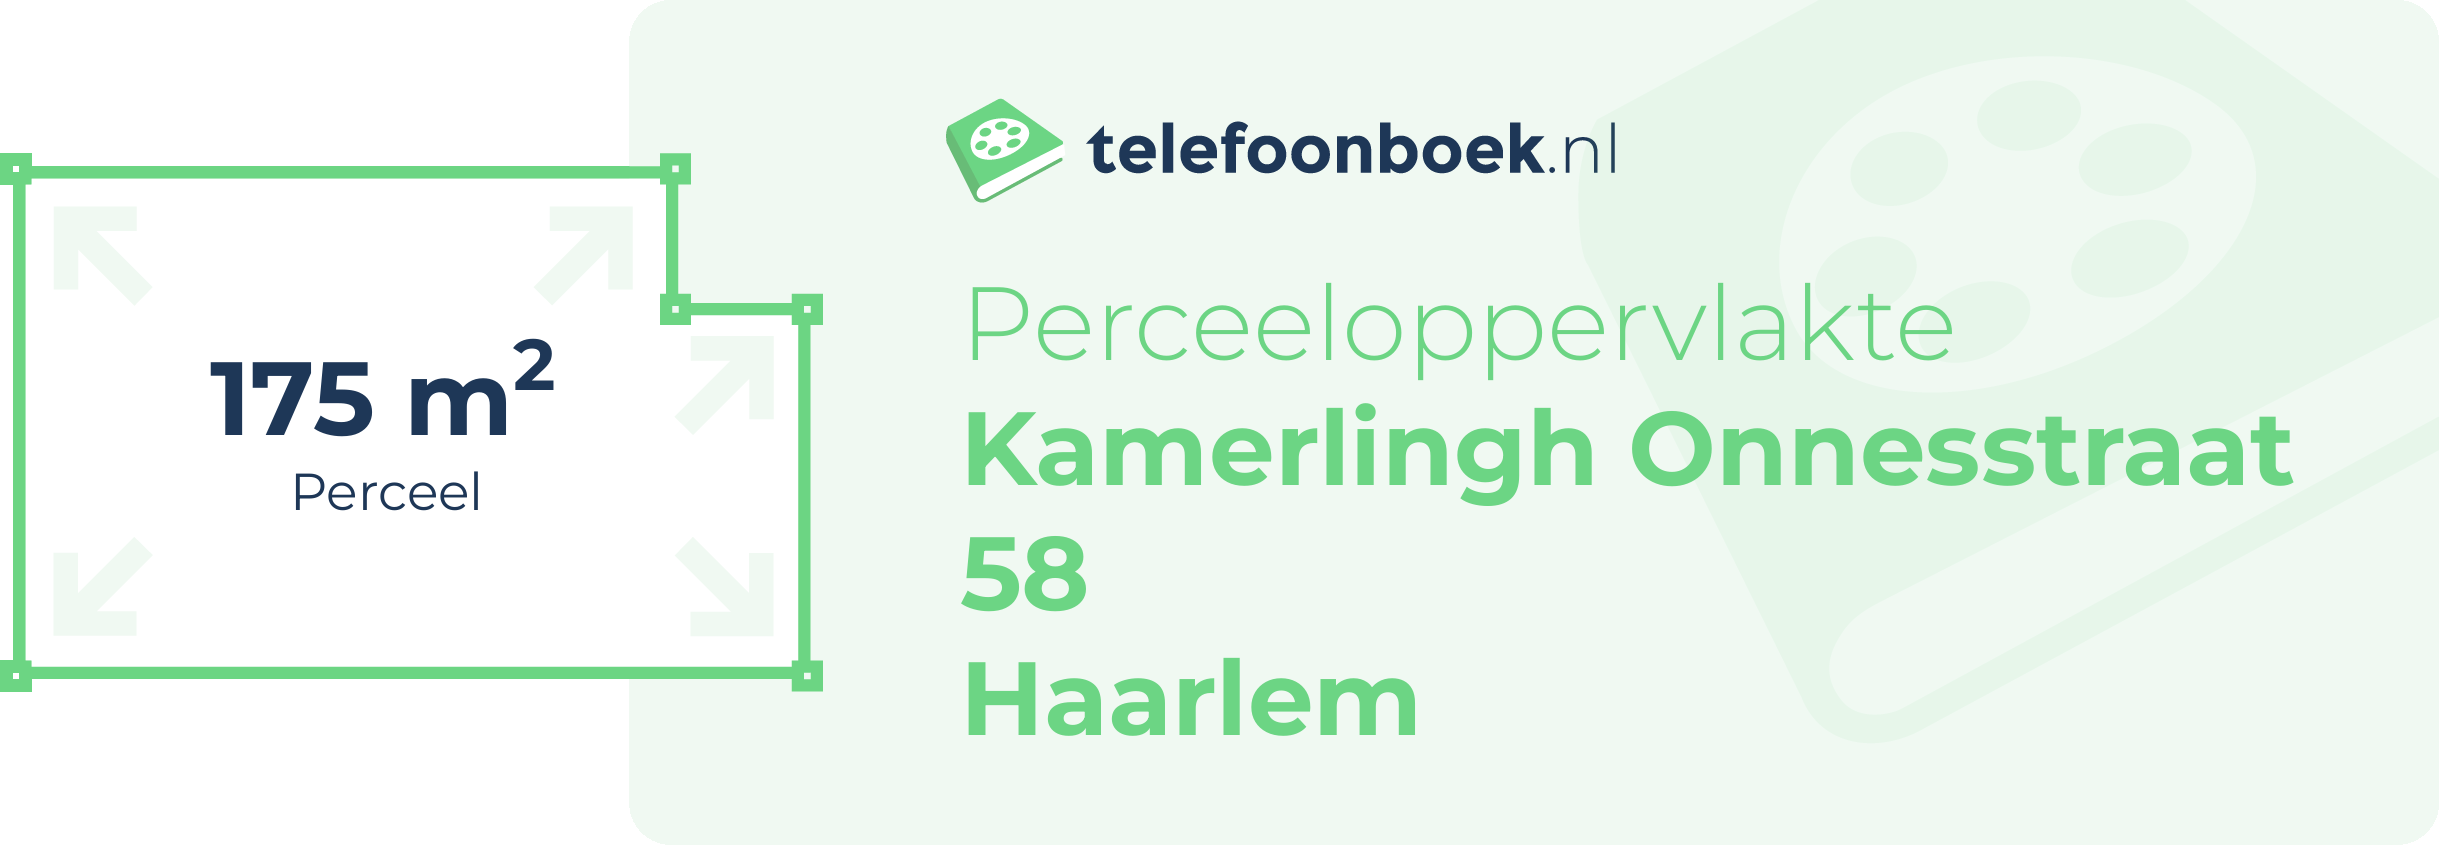 Perceeloppervlakte Kamerlingh Onnesstraat 58 Haarlem